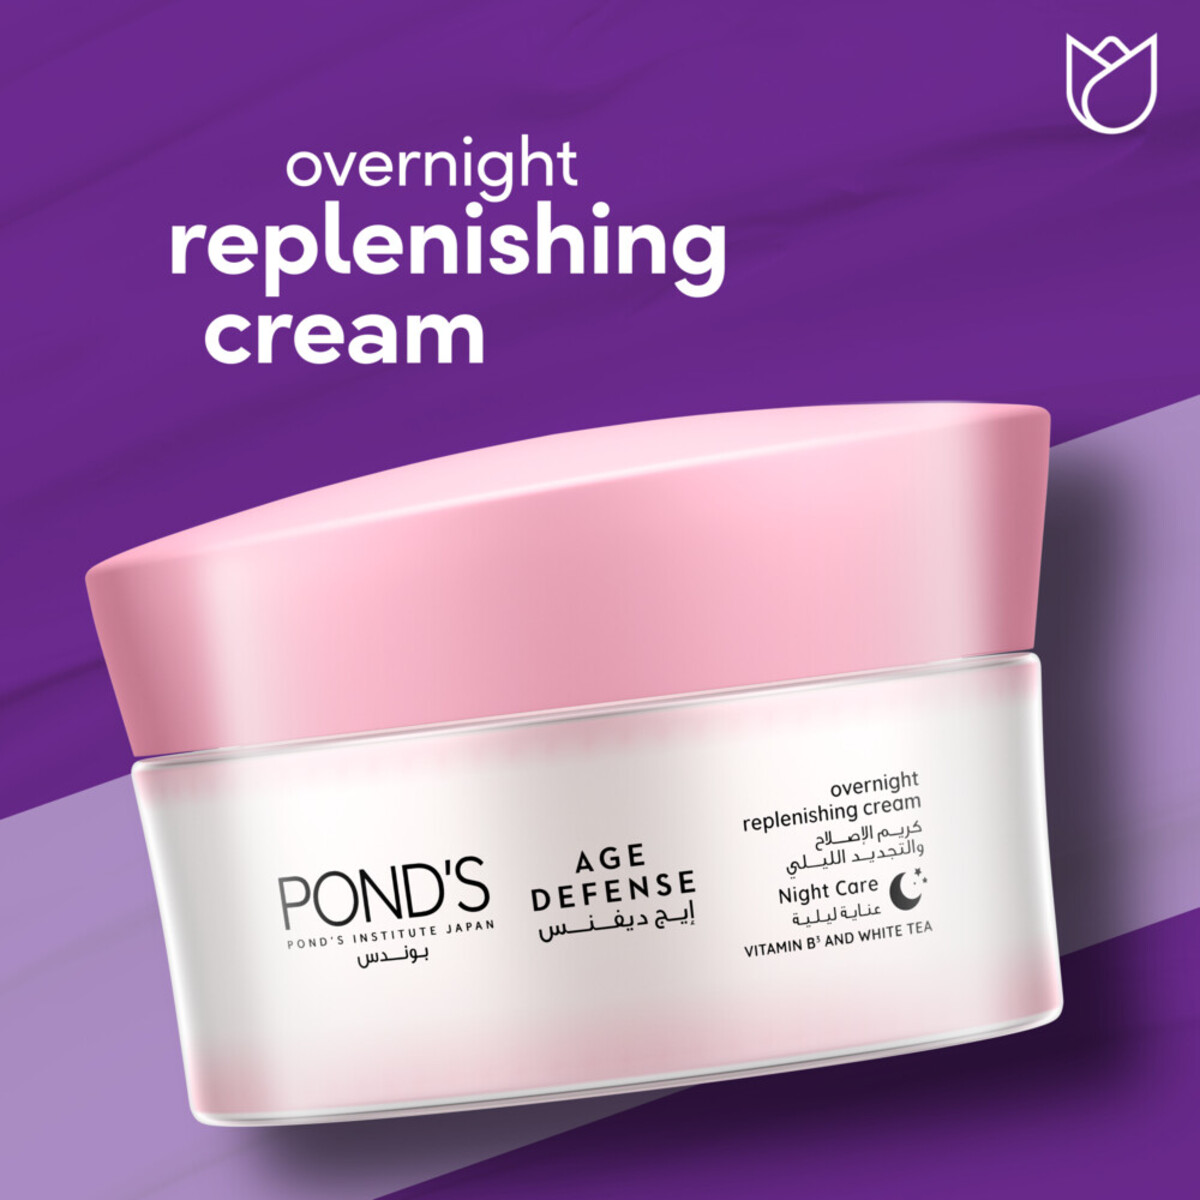 Pond's Age Defense Overnight Replenishing Night Cream 50 ml